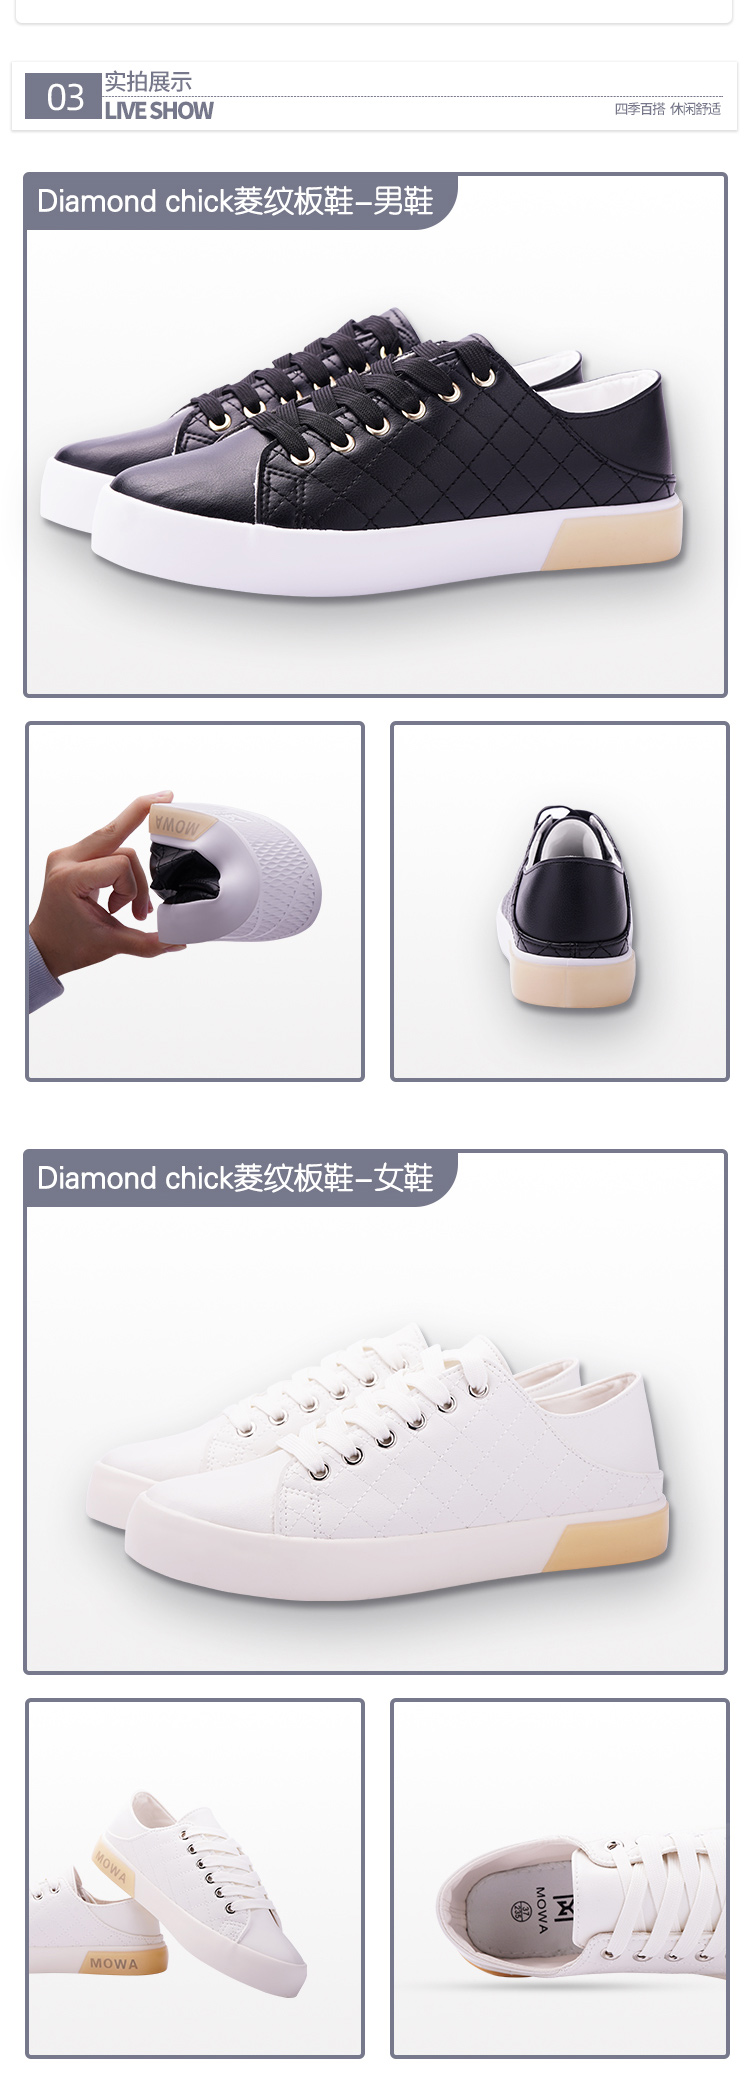 Diamondchick菱纹板鞋详情1